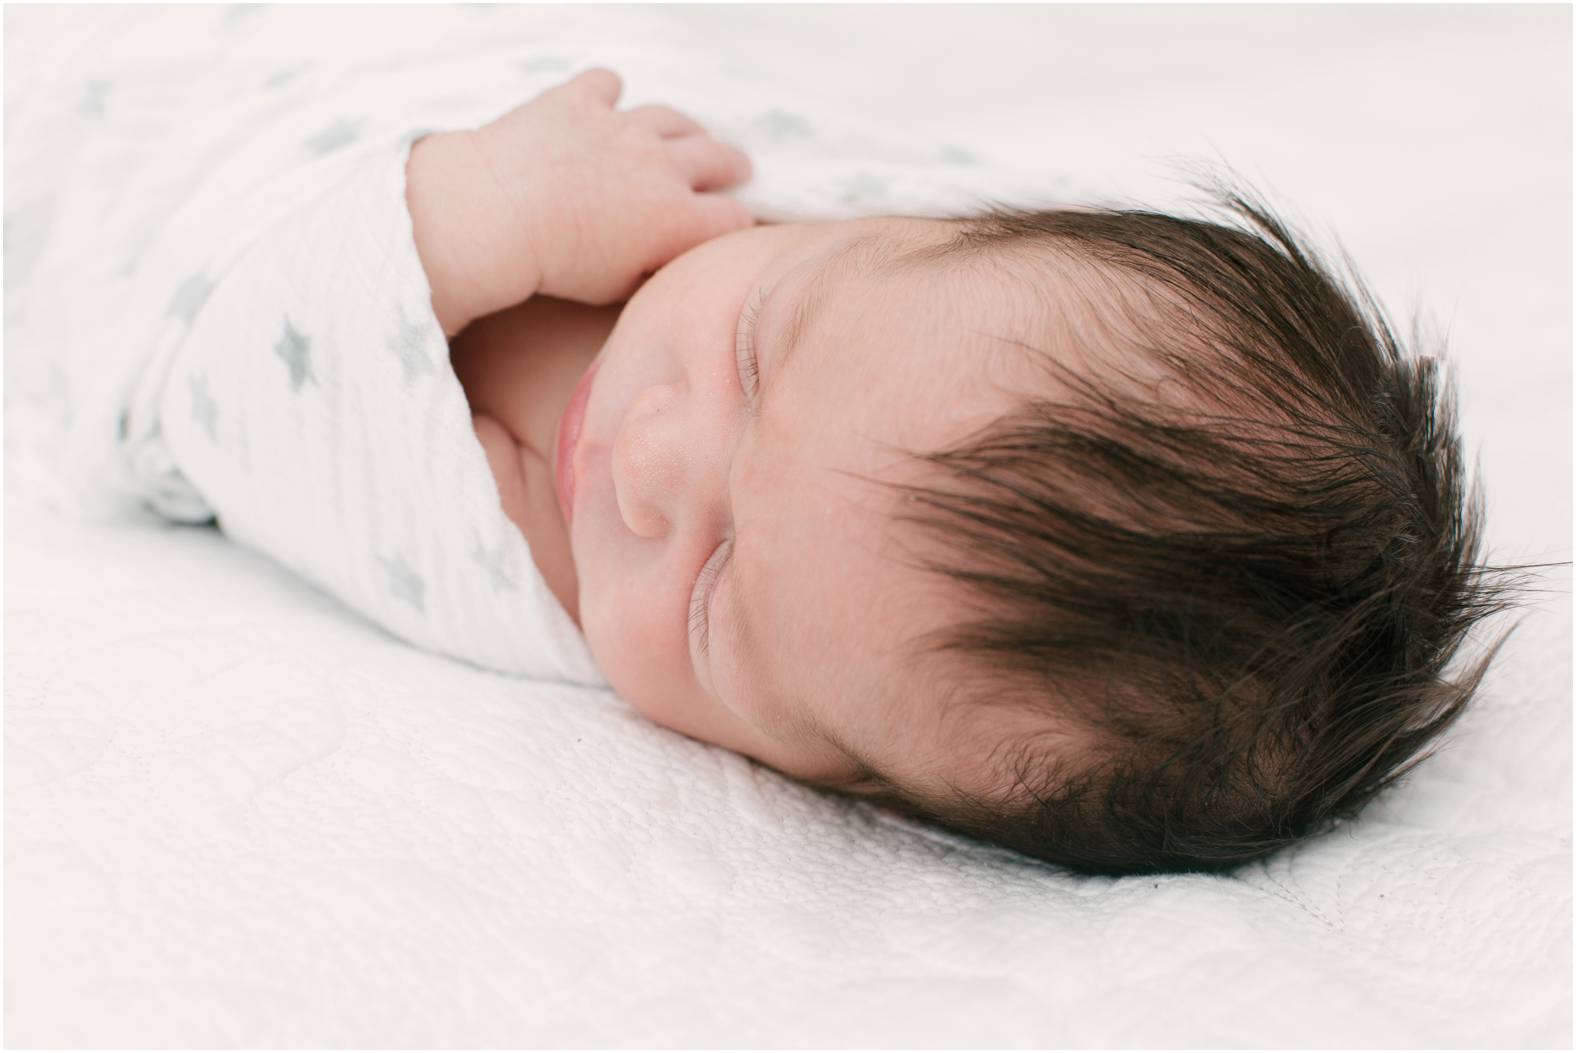 newborn baby boy with lots of dark hair